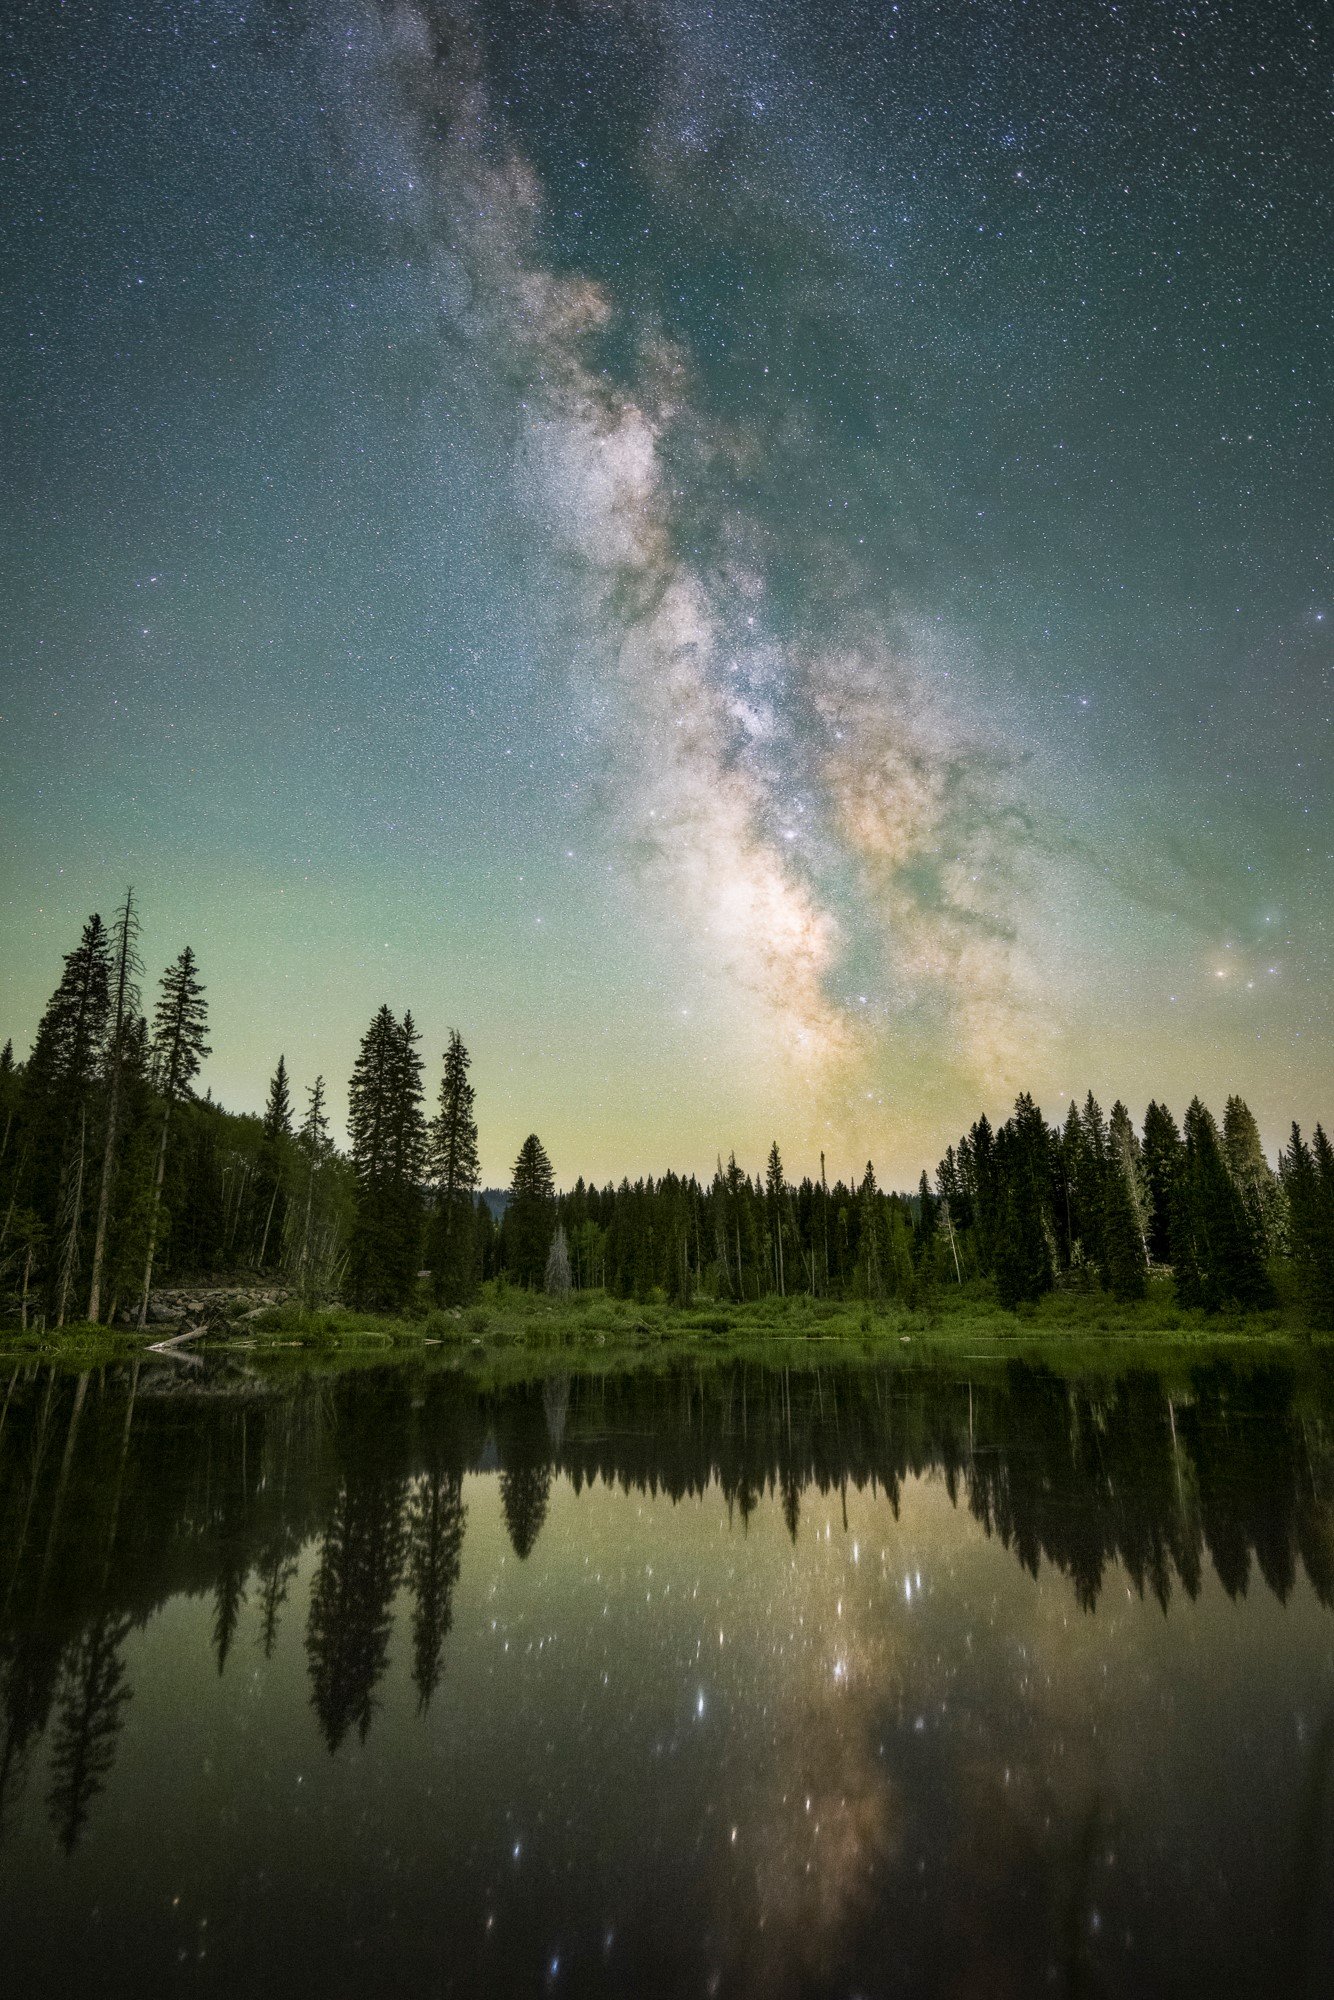 Grand Mesa Milky Way Reflection by Marc Rassel